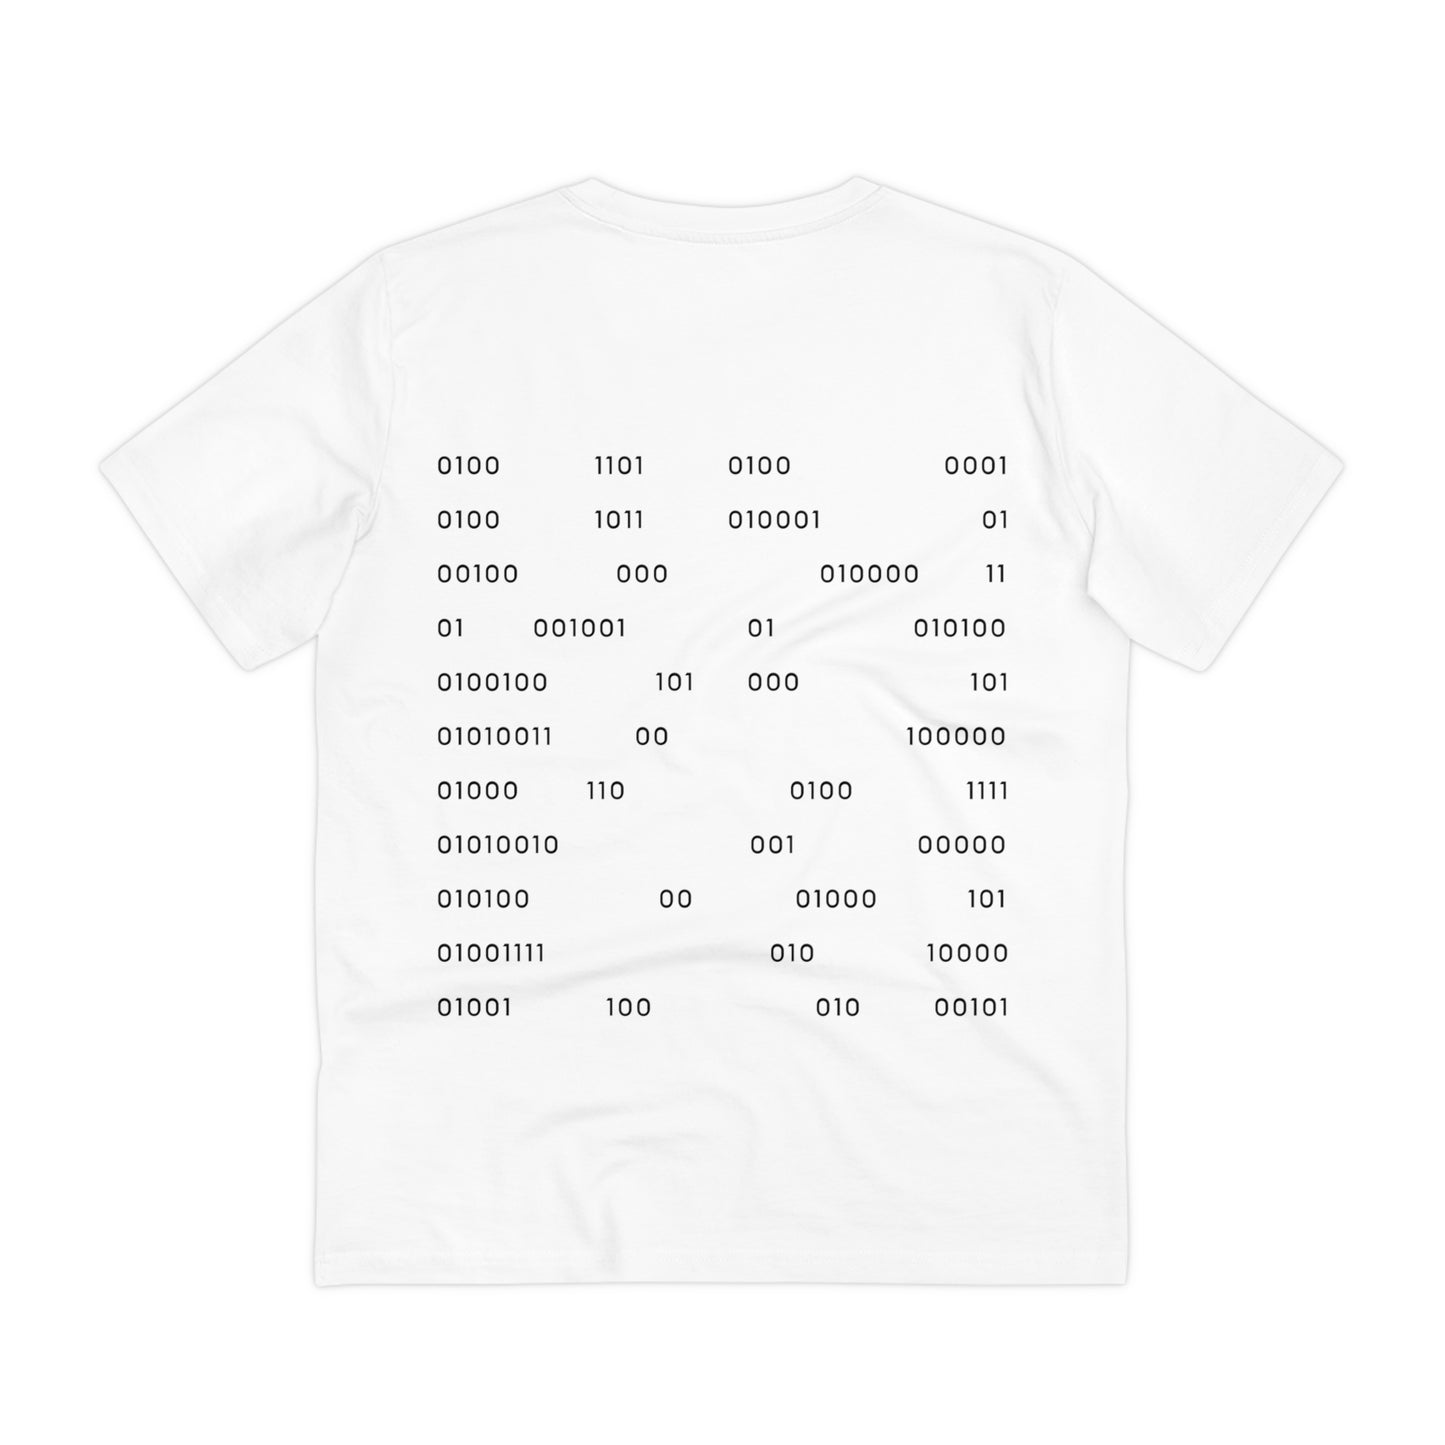 Bolt 10 binary t-shirt white